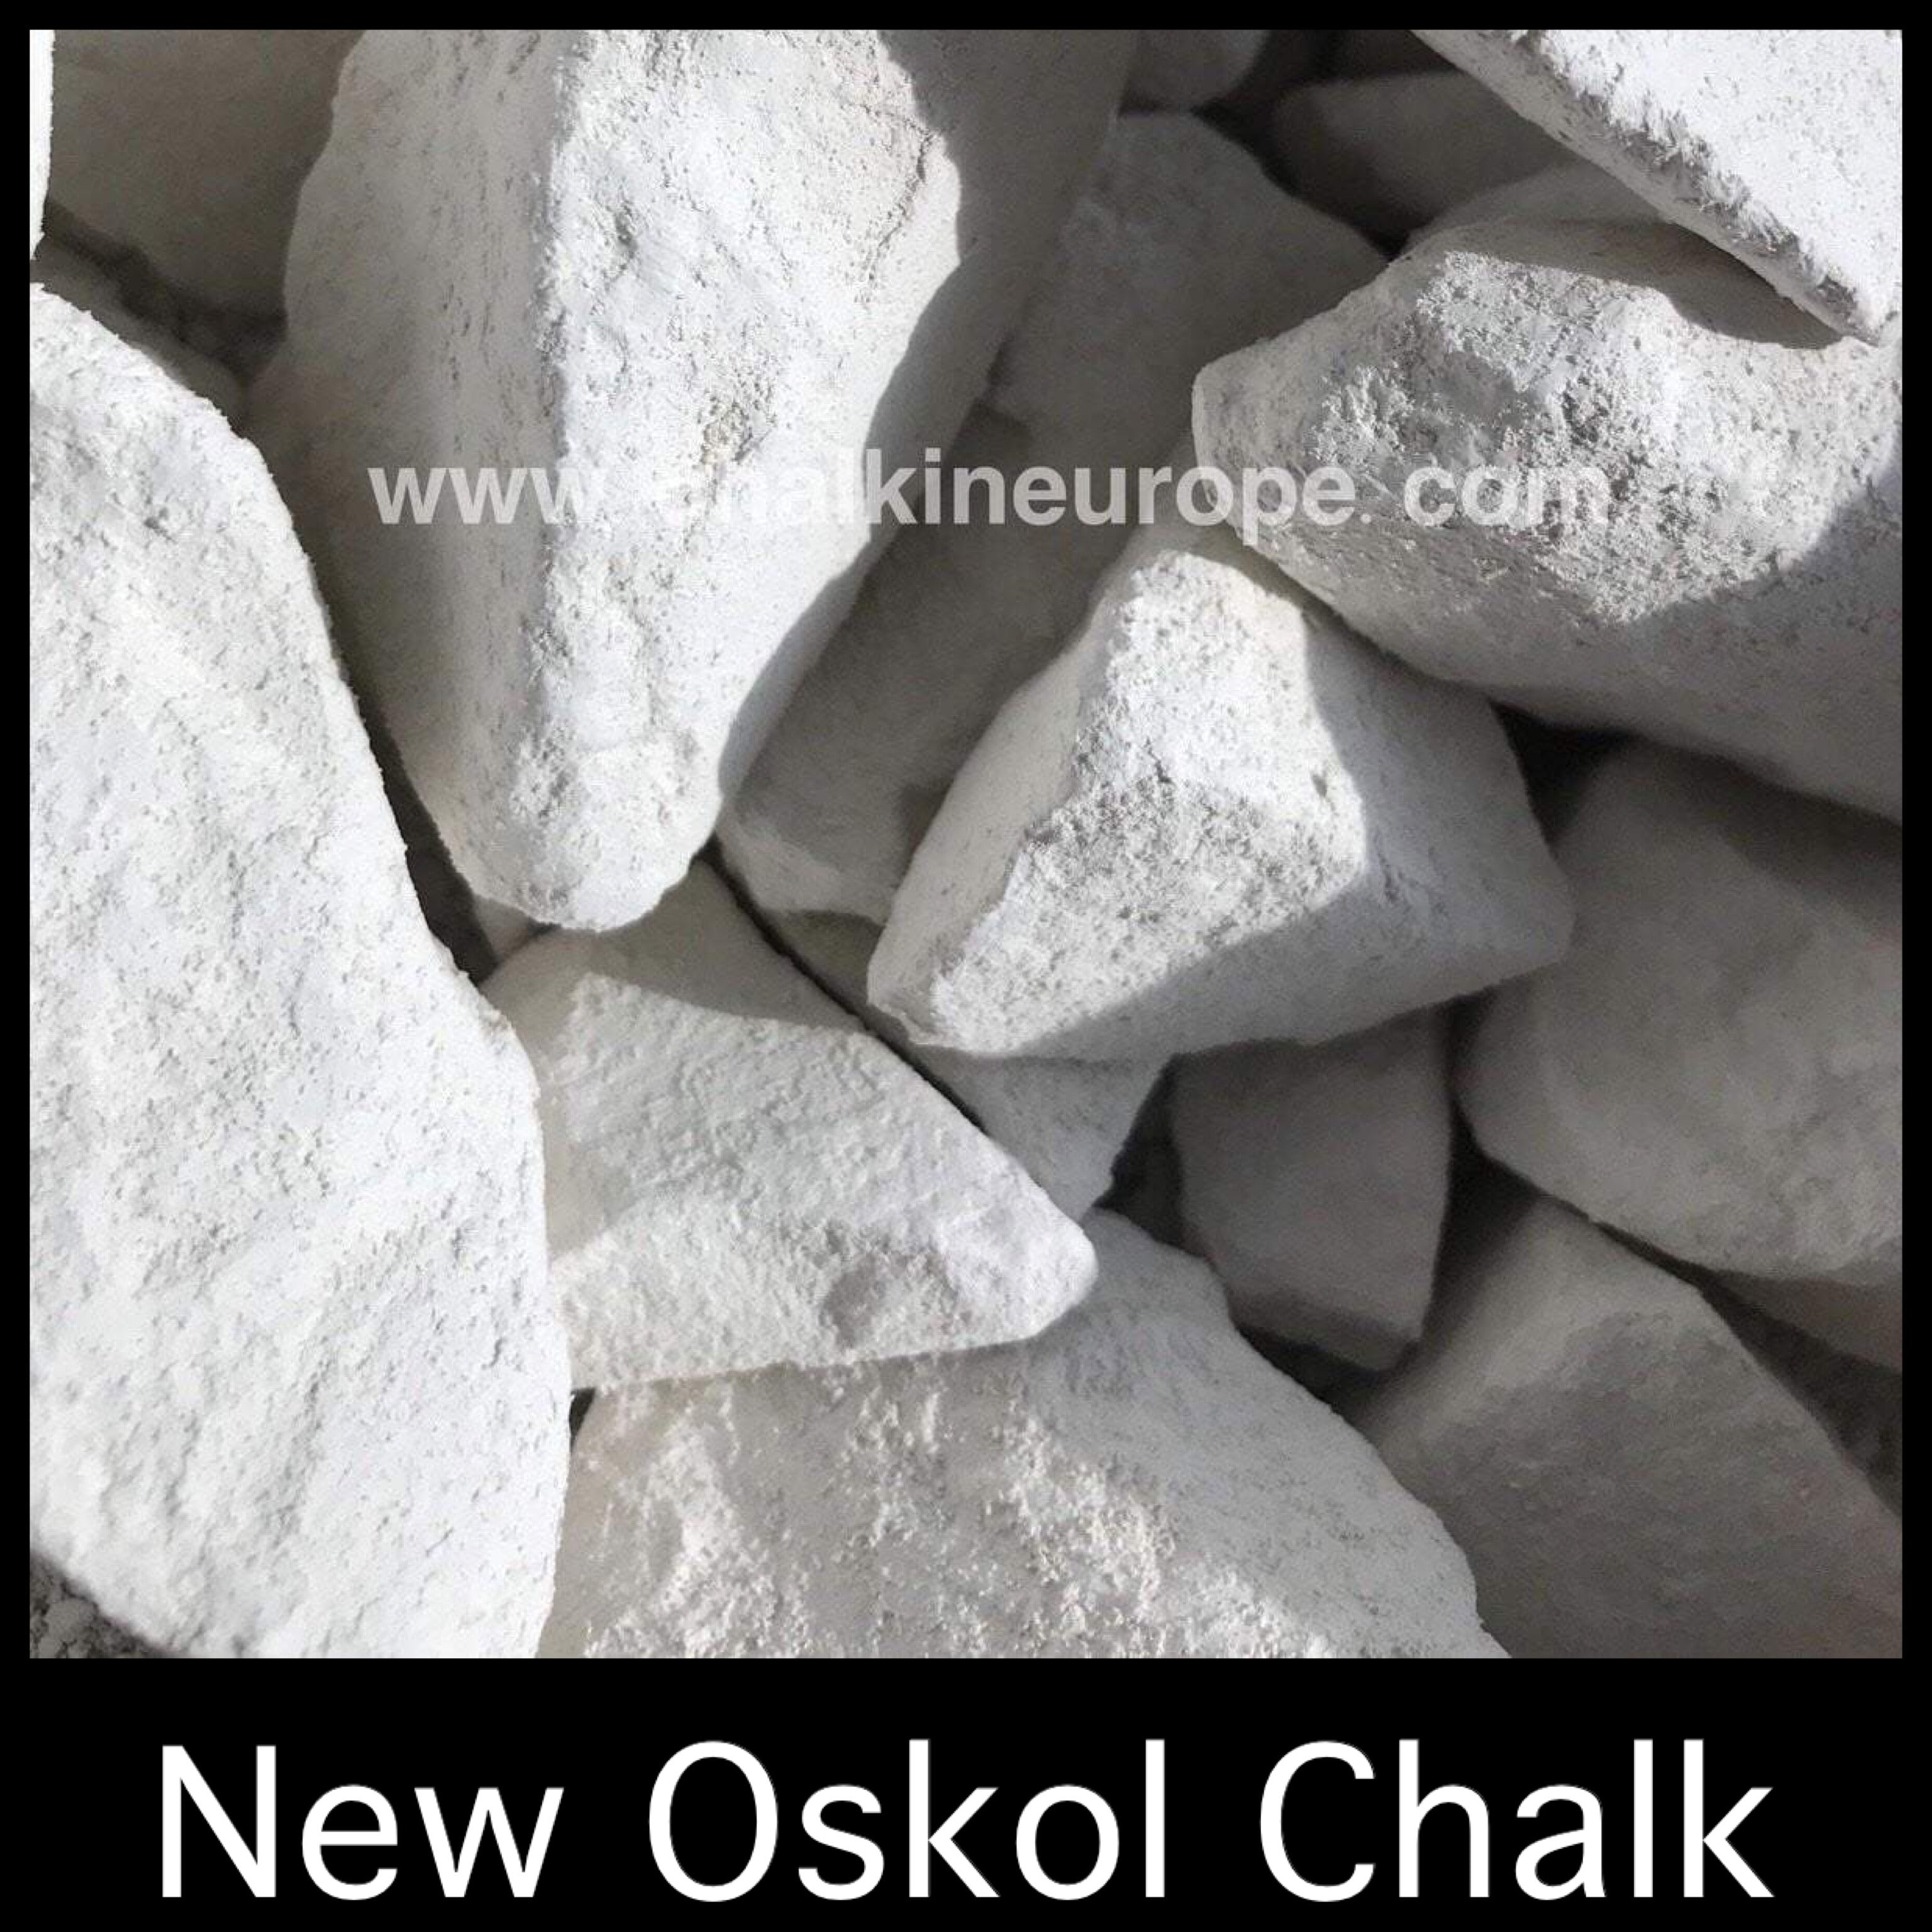 Nouvelle craie d'Oskol - Chalkineurope